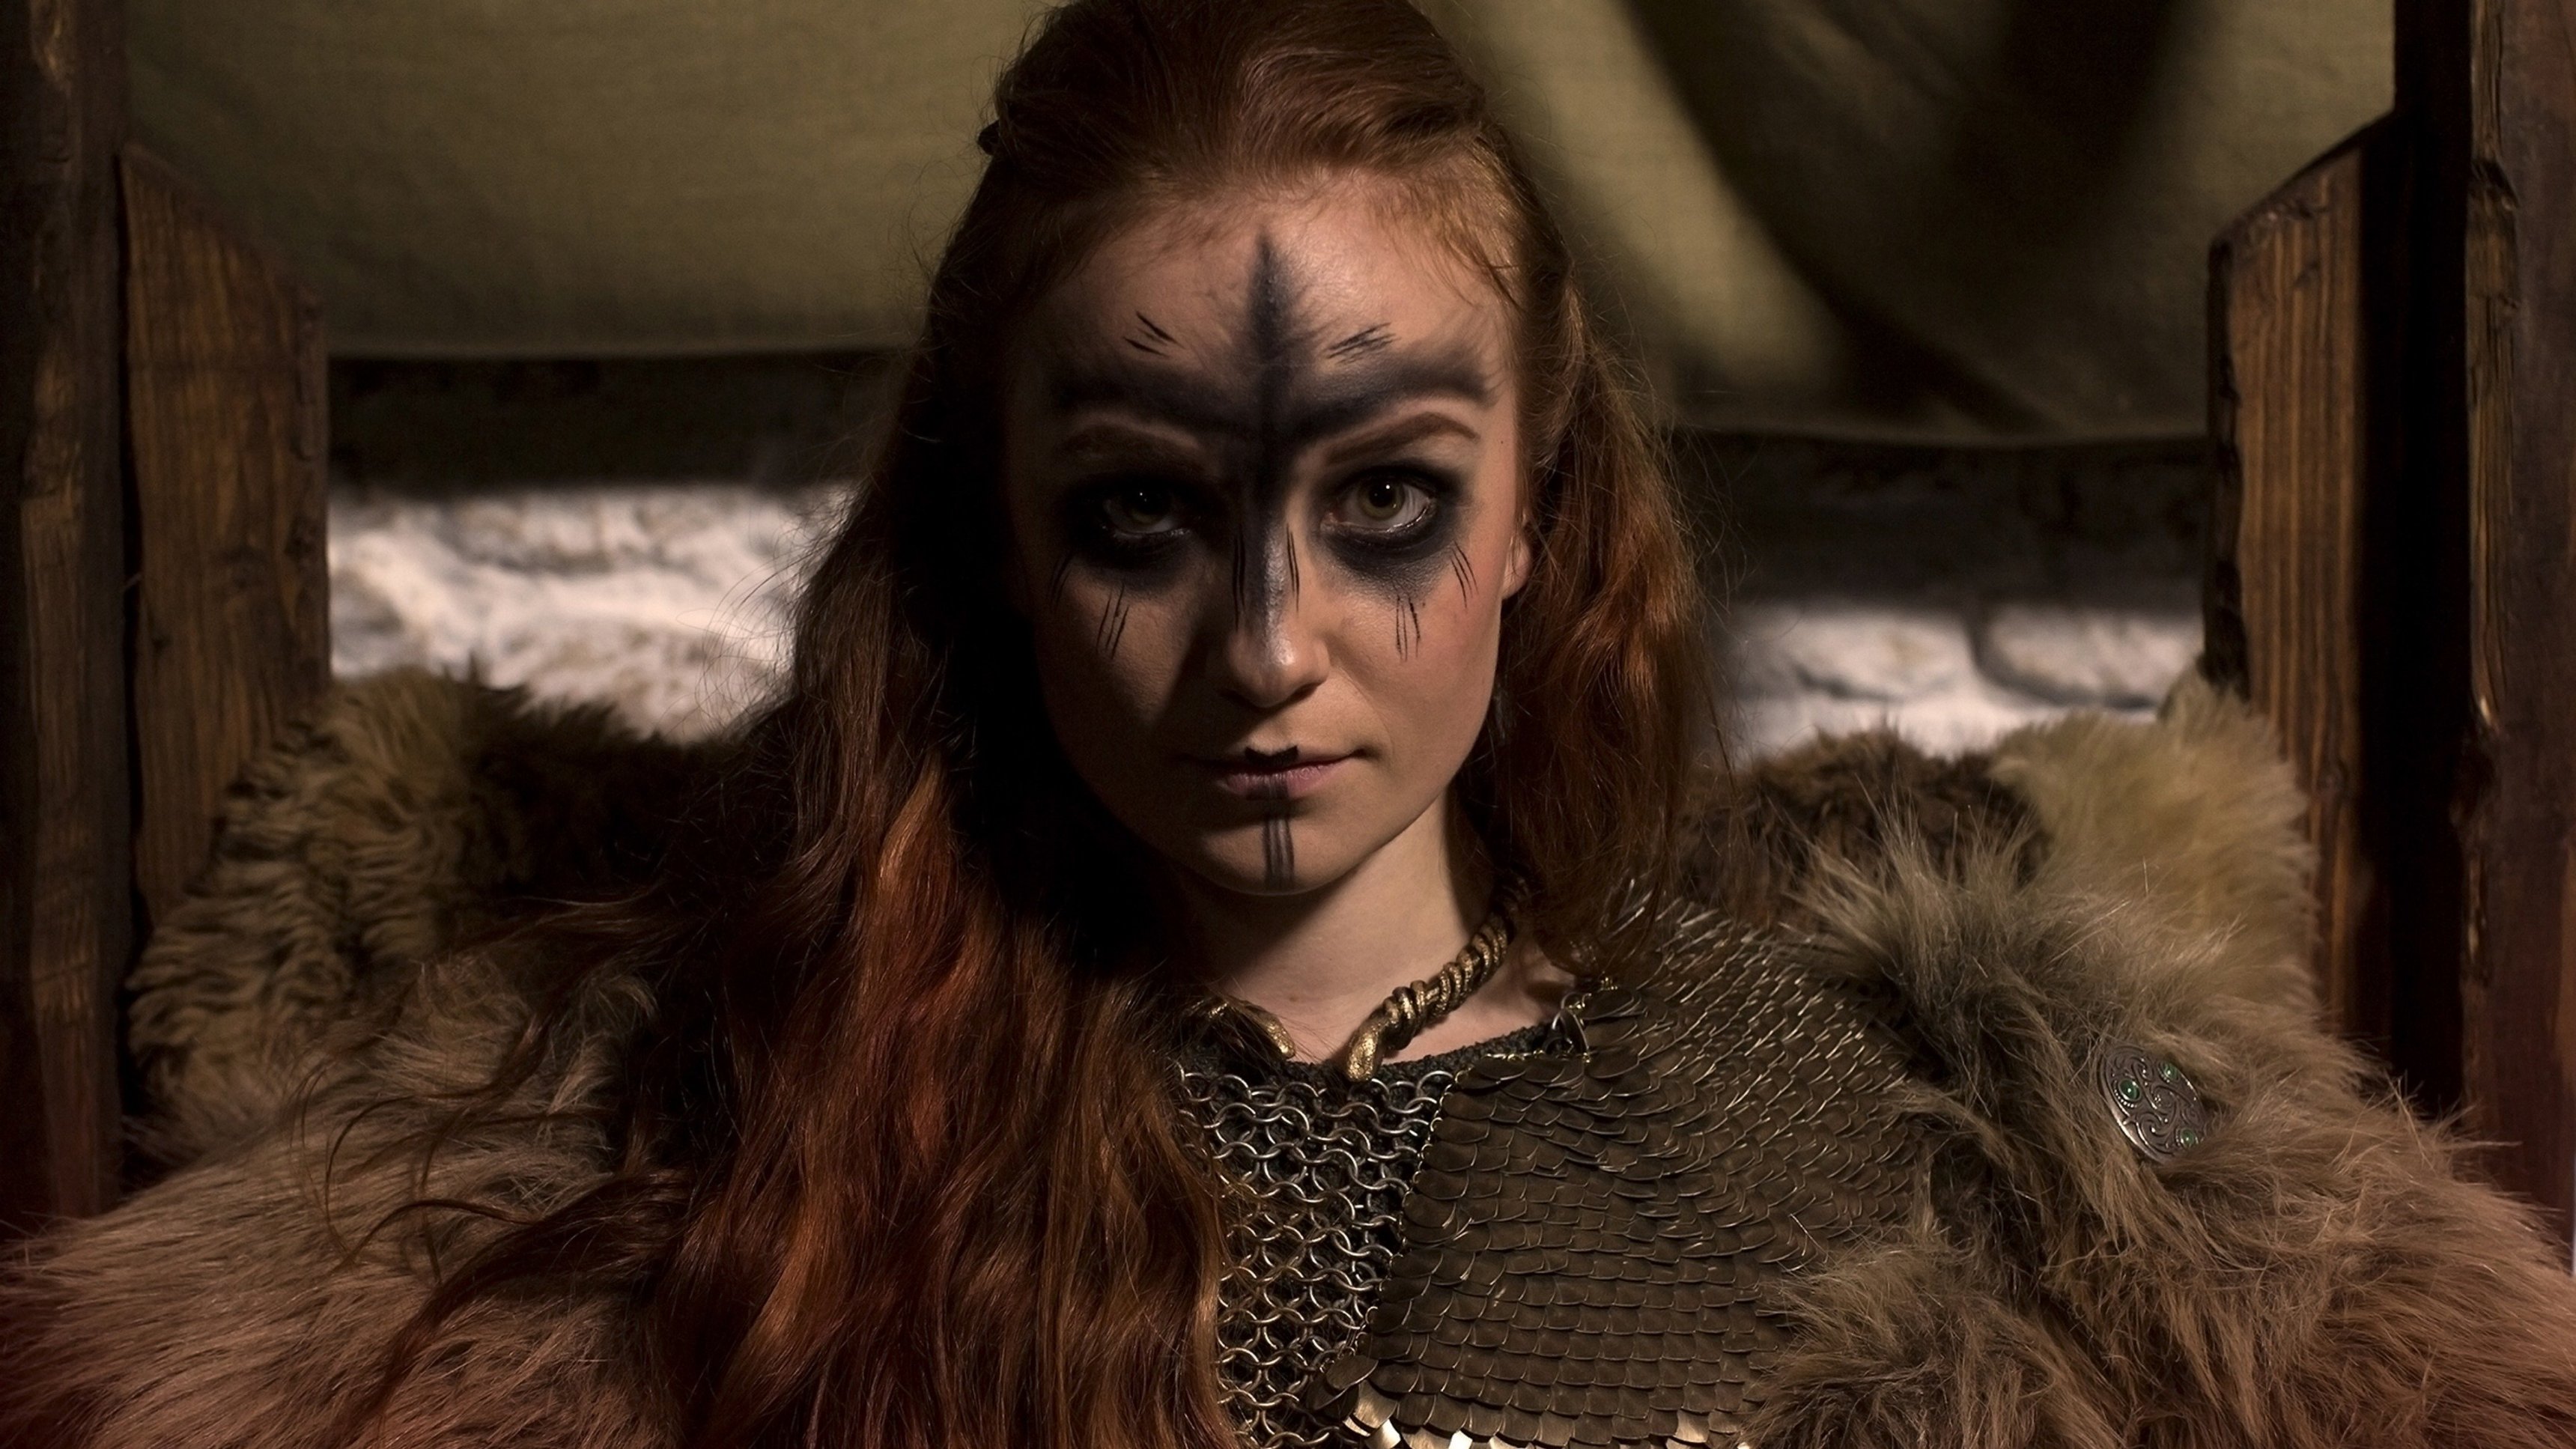 Boudica: Rise of the Warrior Queen